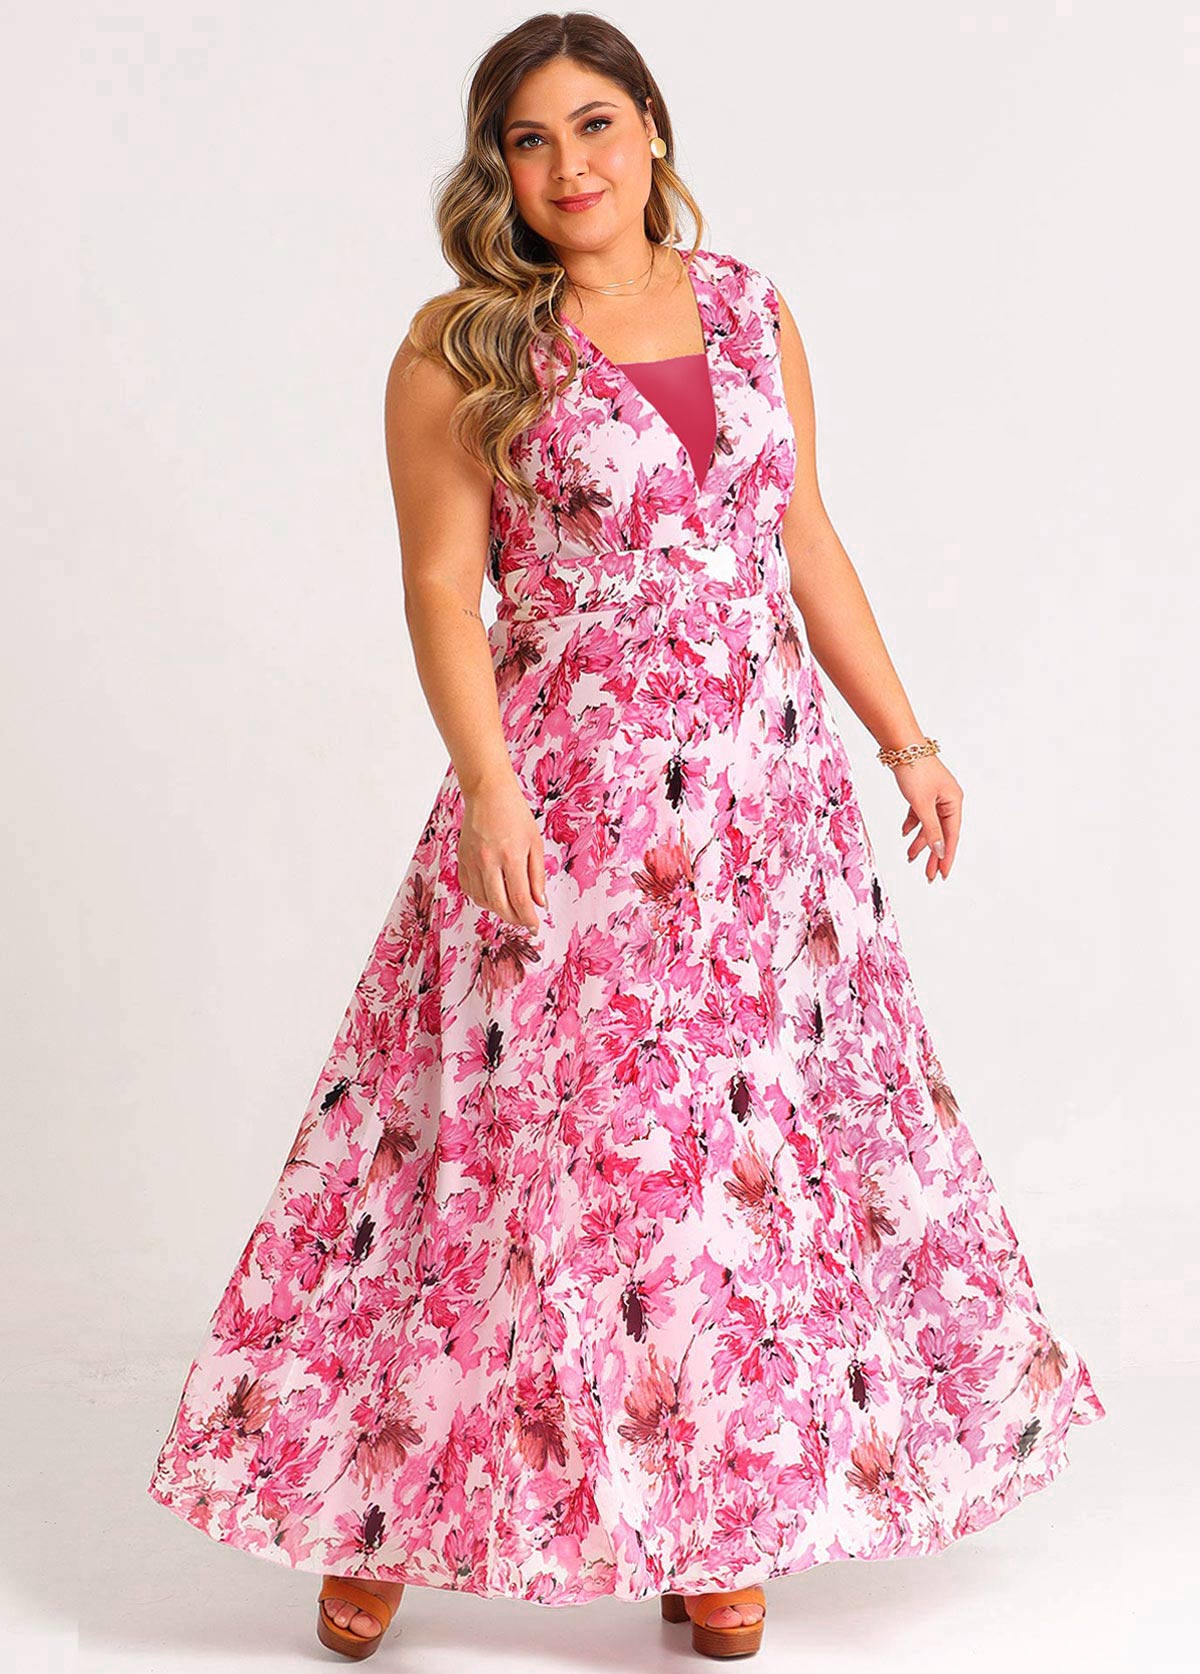 Sleeveless Floral Print Pink Chiffon Plus Size Dress